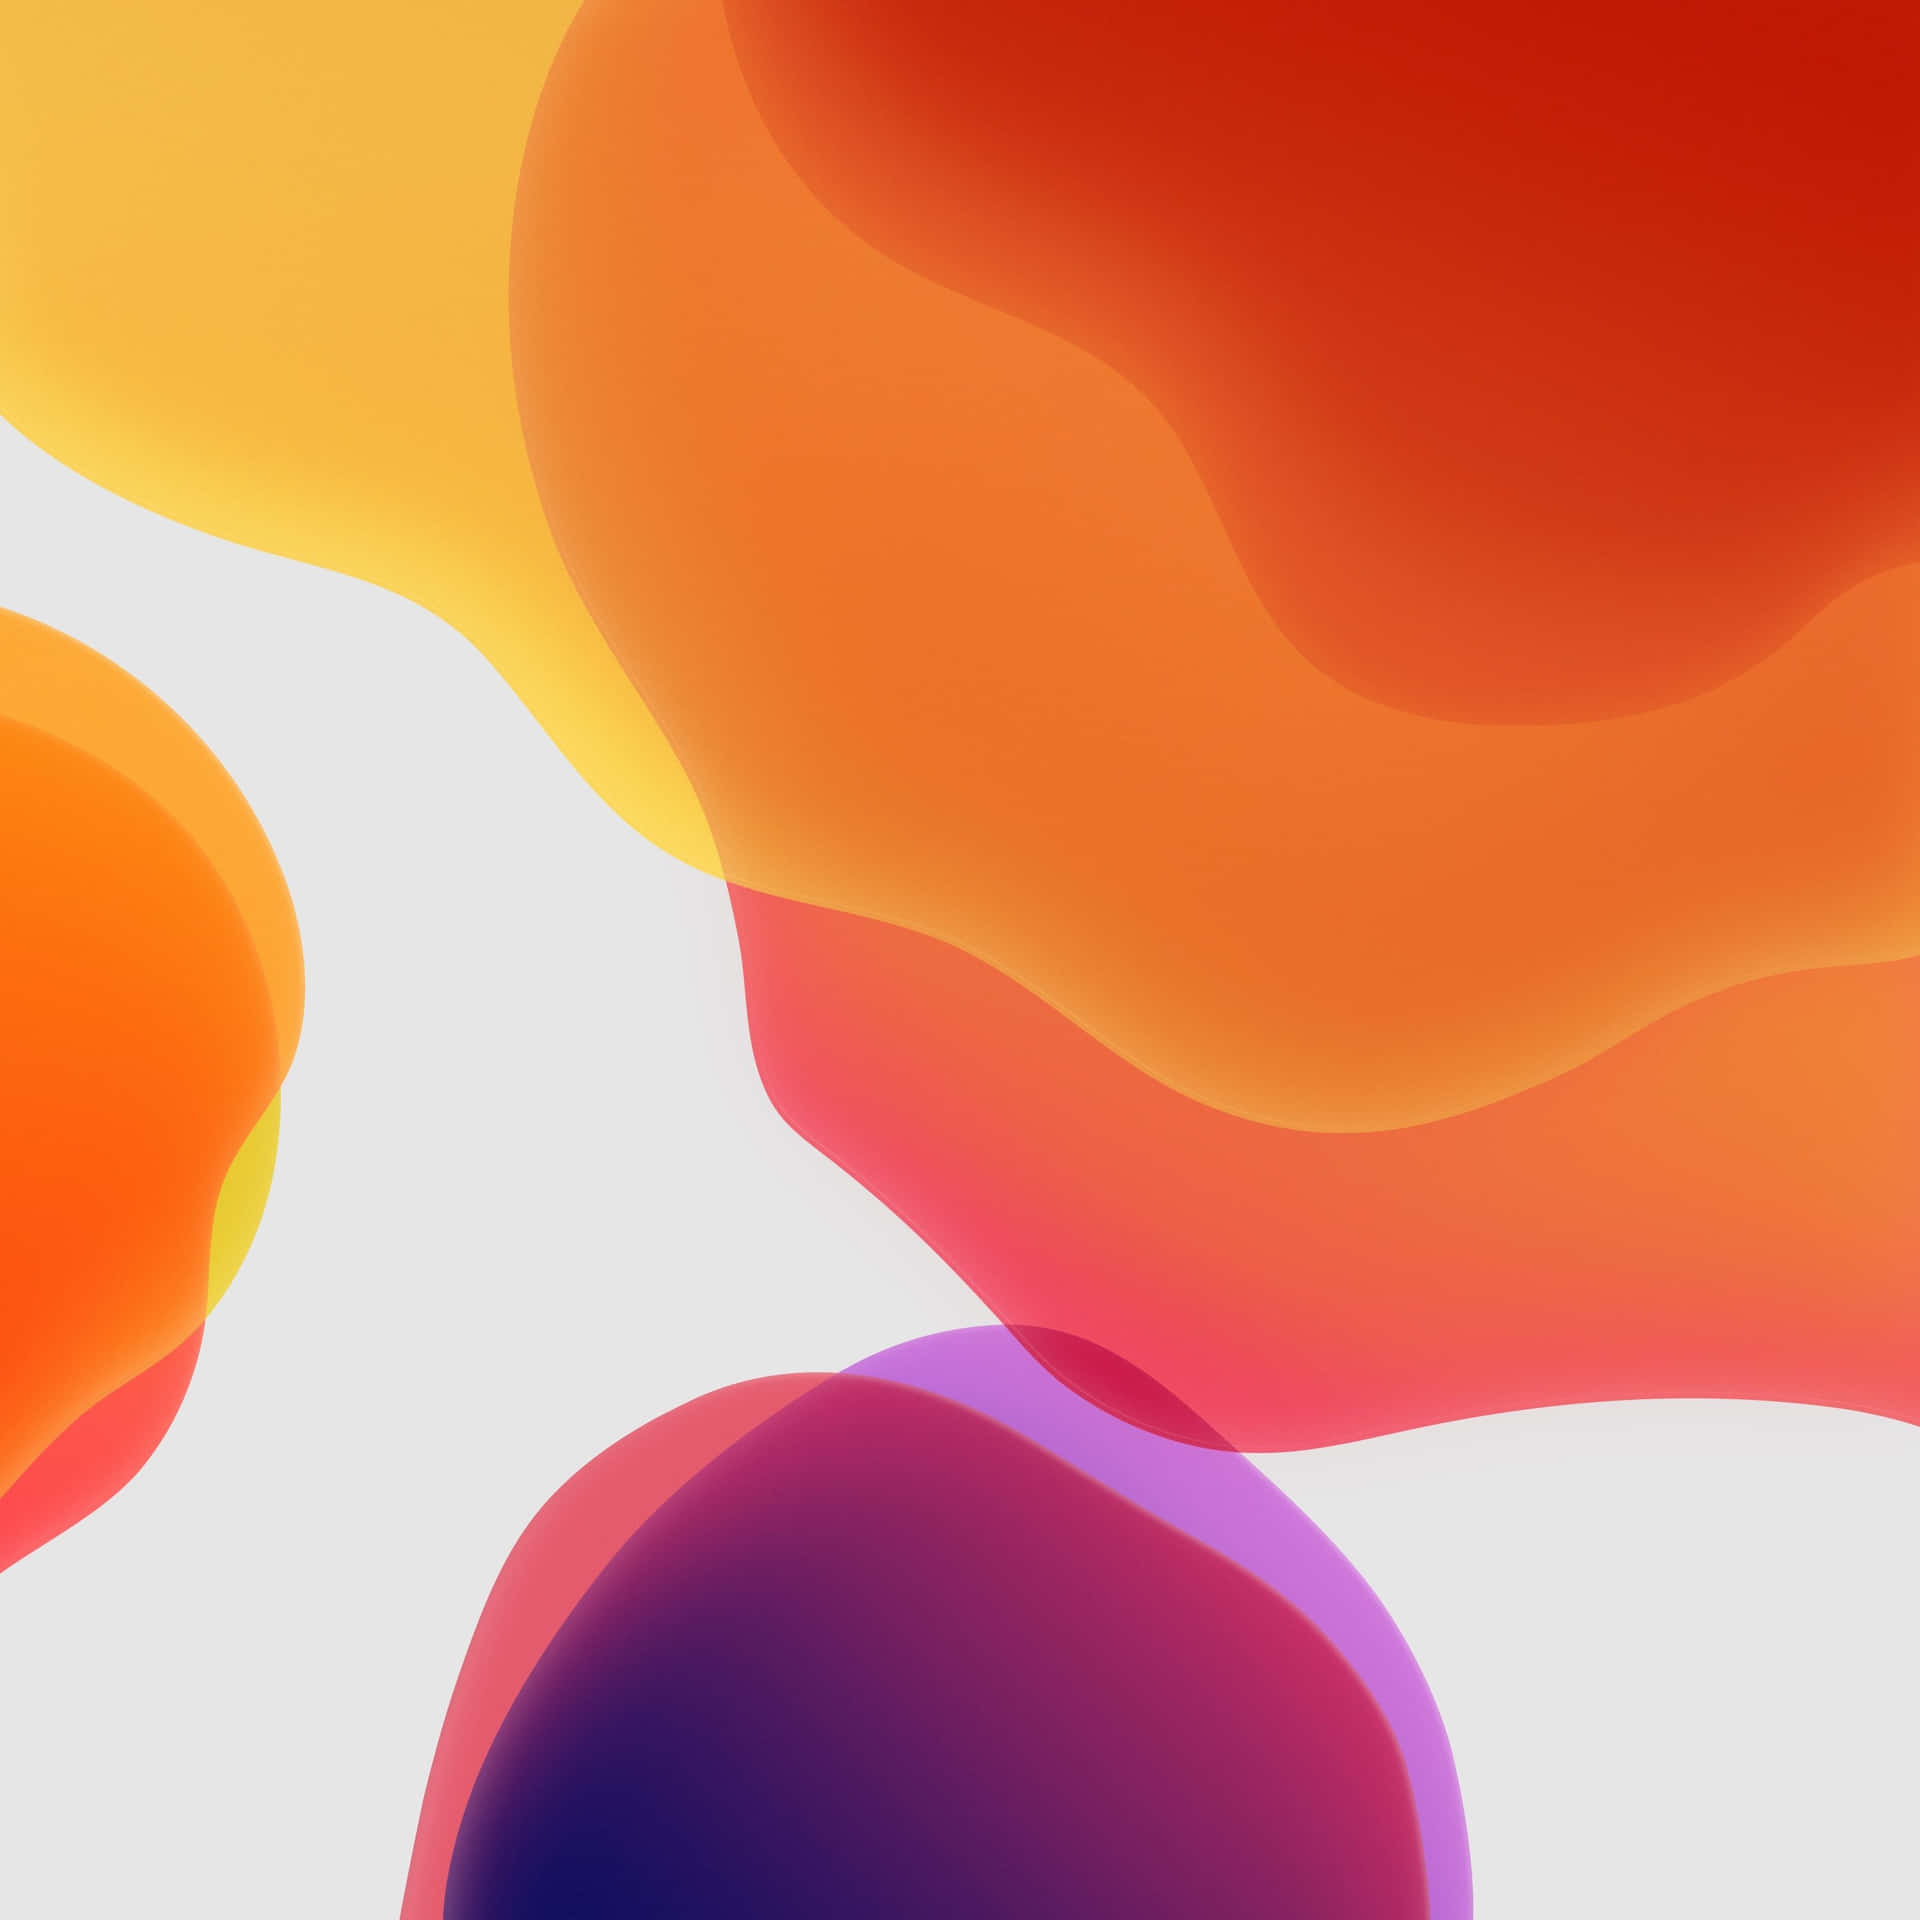 Ios 1 Light Orange And Violet Bubbles Wallpaper